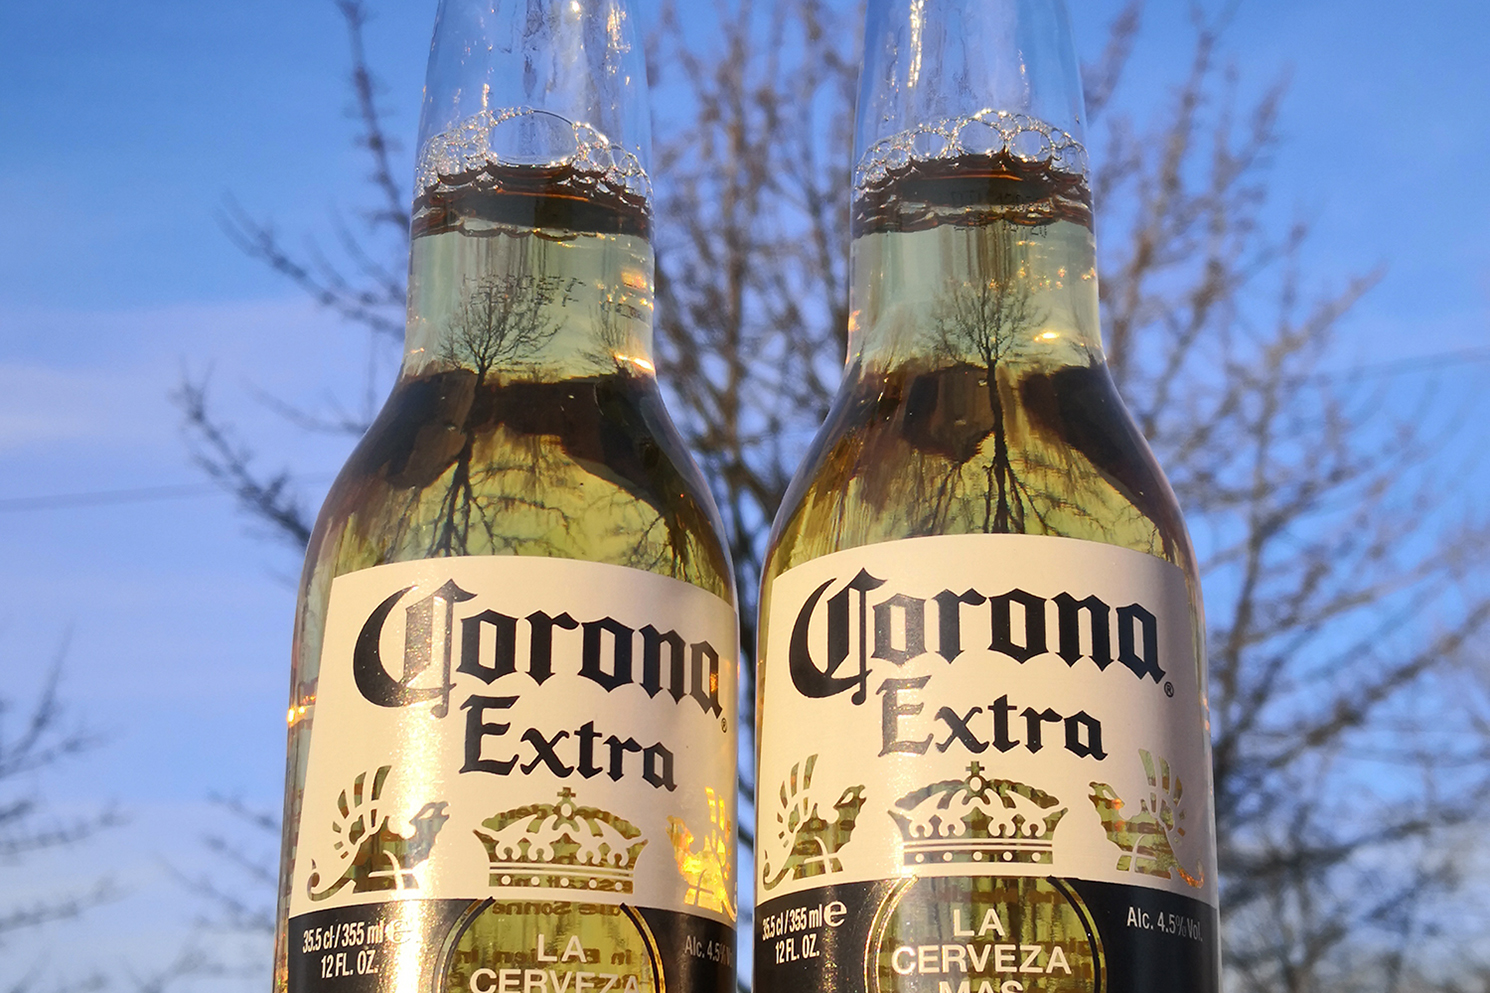 Corona positiv flaschen